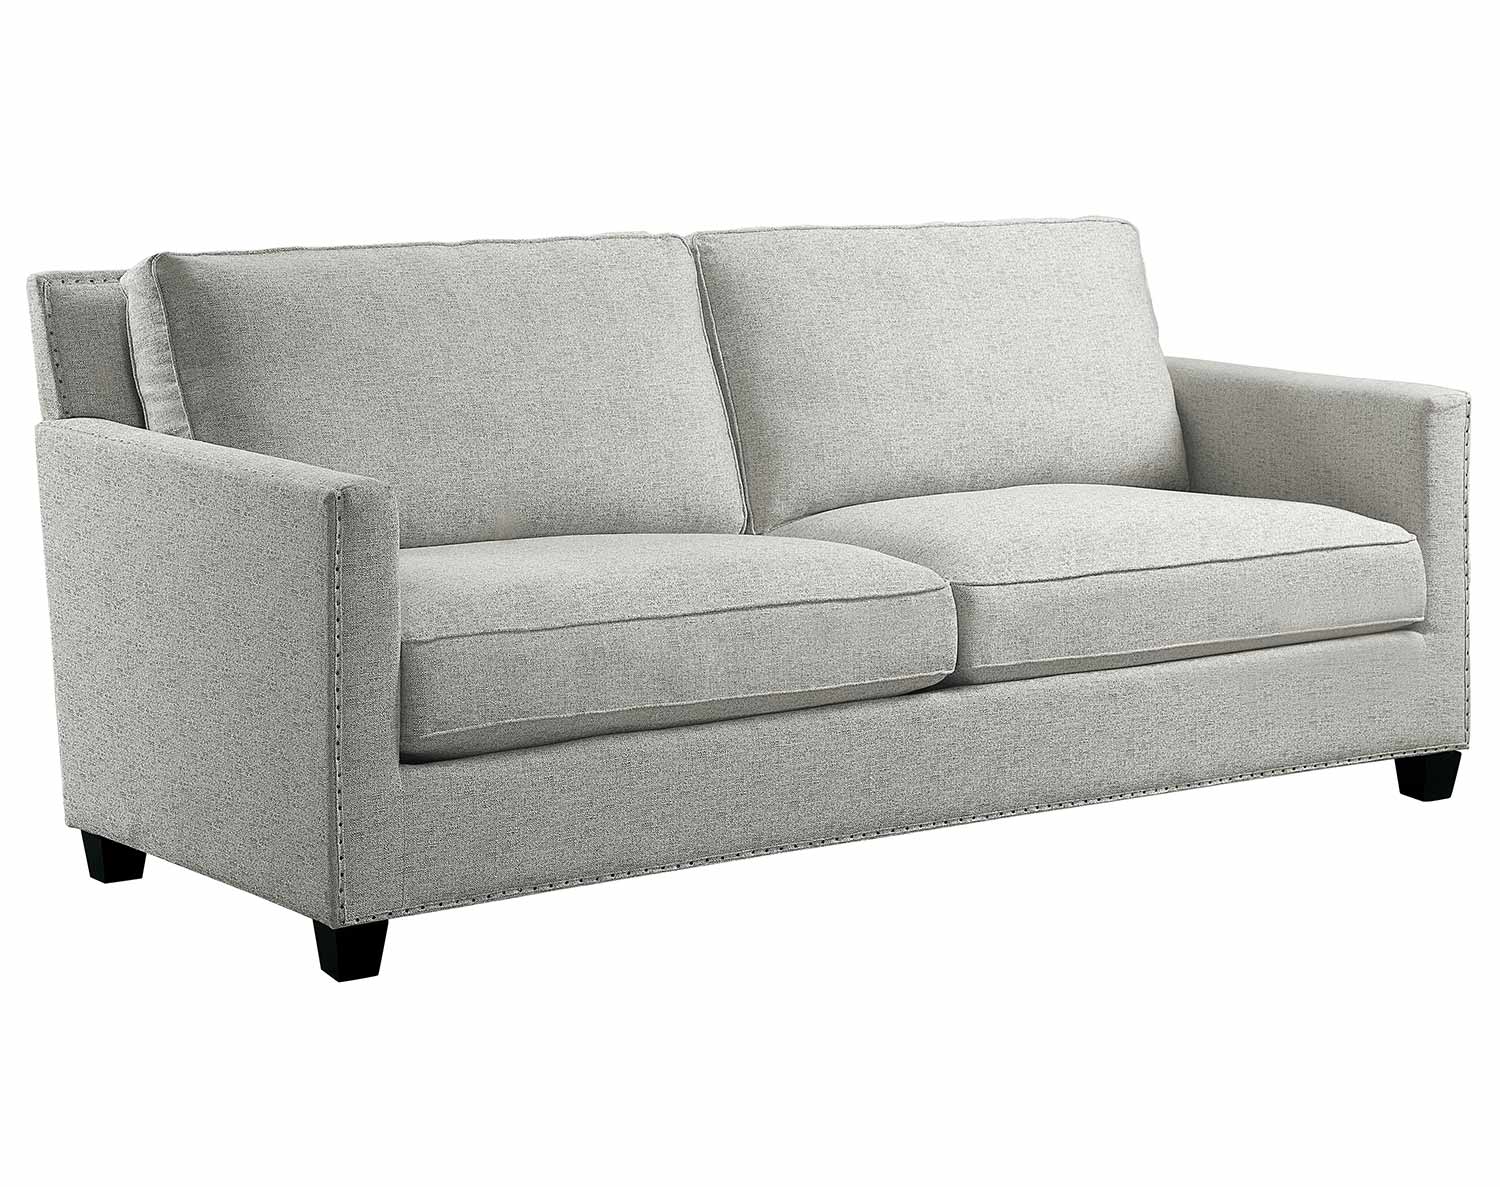 Homelegance Pickerington Sofa - Light gray